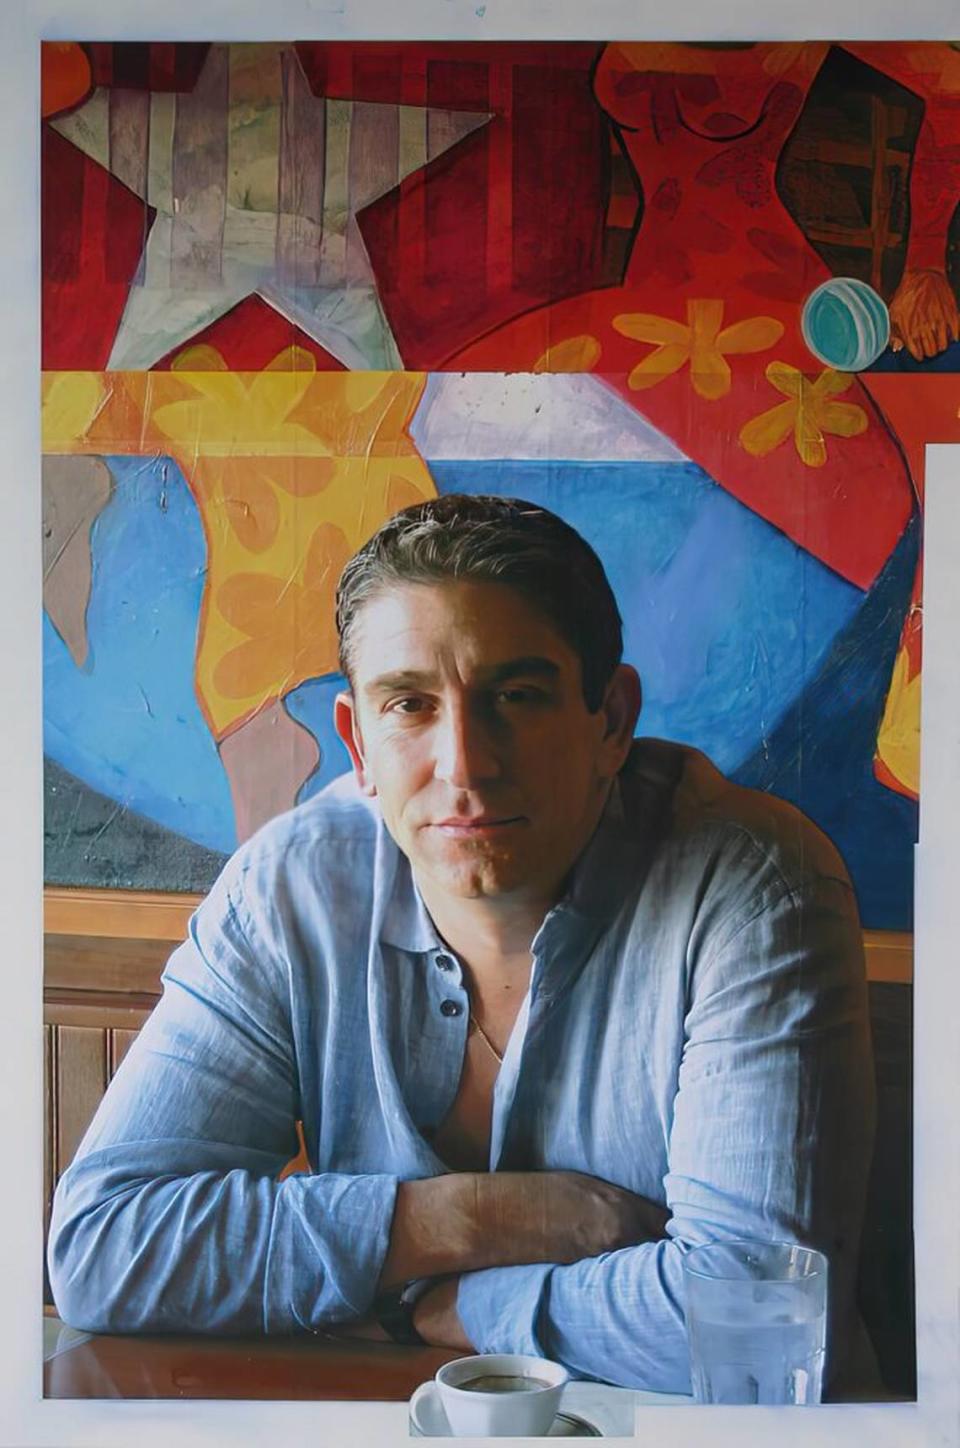 “La Carreta.” Richard Blanco, 2014. 40 x 60 inches. Mixed-media on canvas.